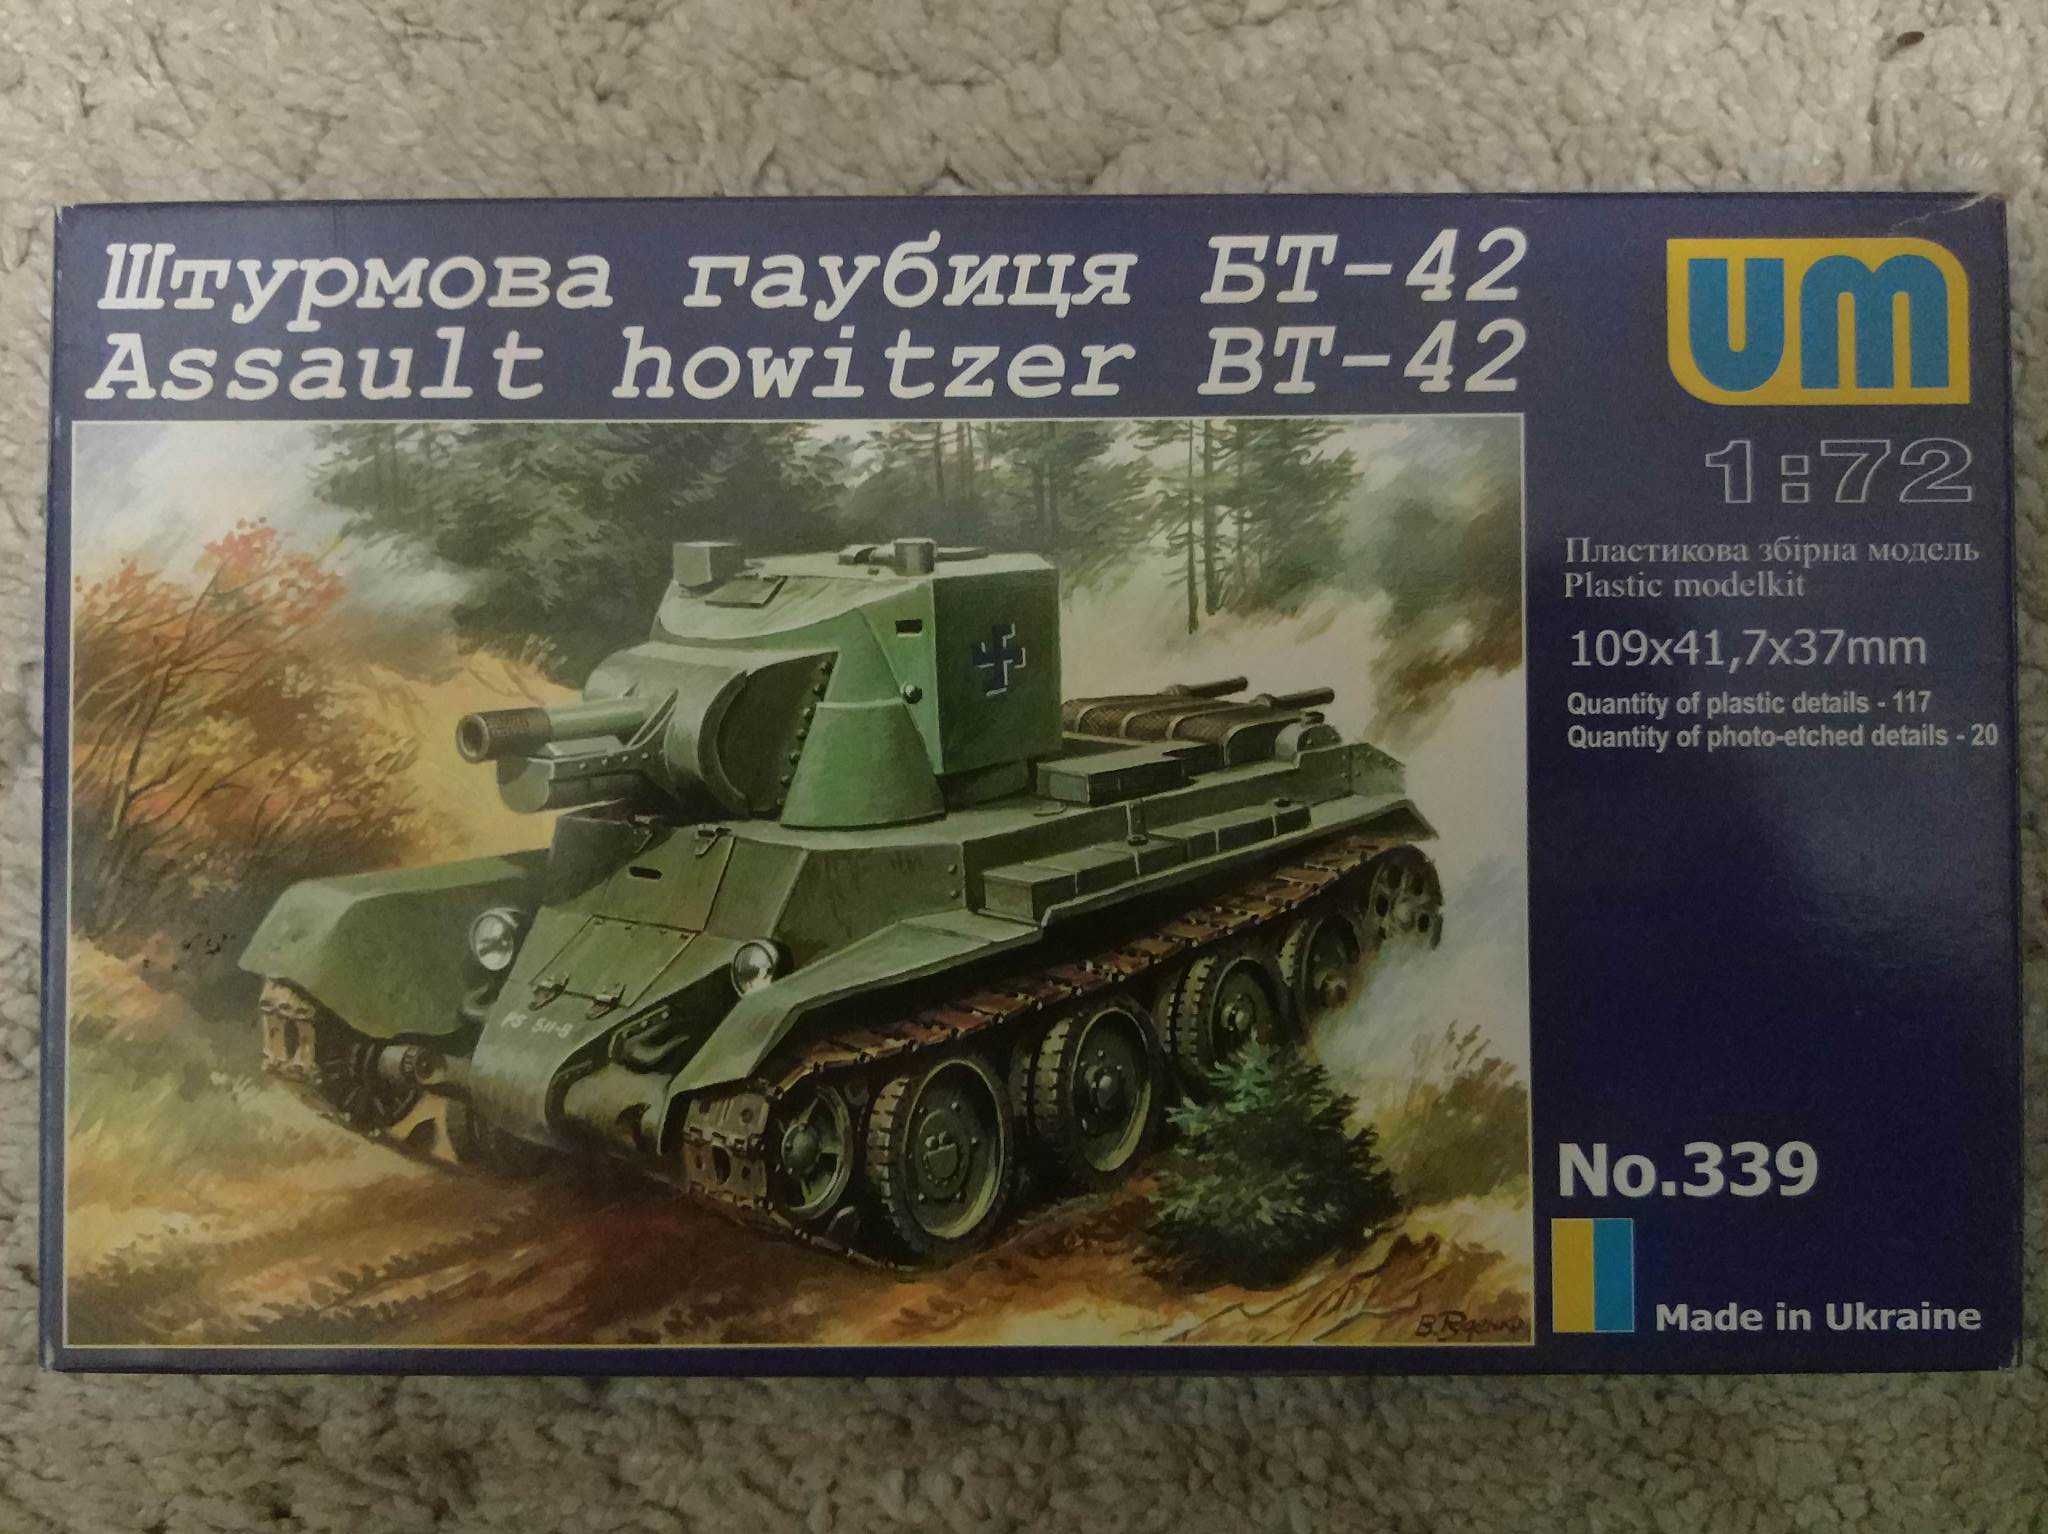 Unimodels UM 339 Assault howitzer Finnish Tank BT-42